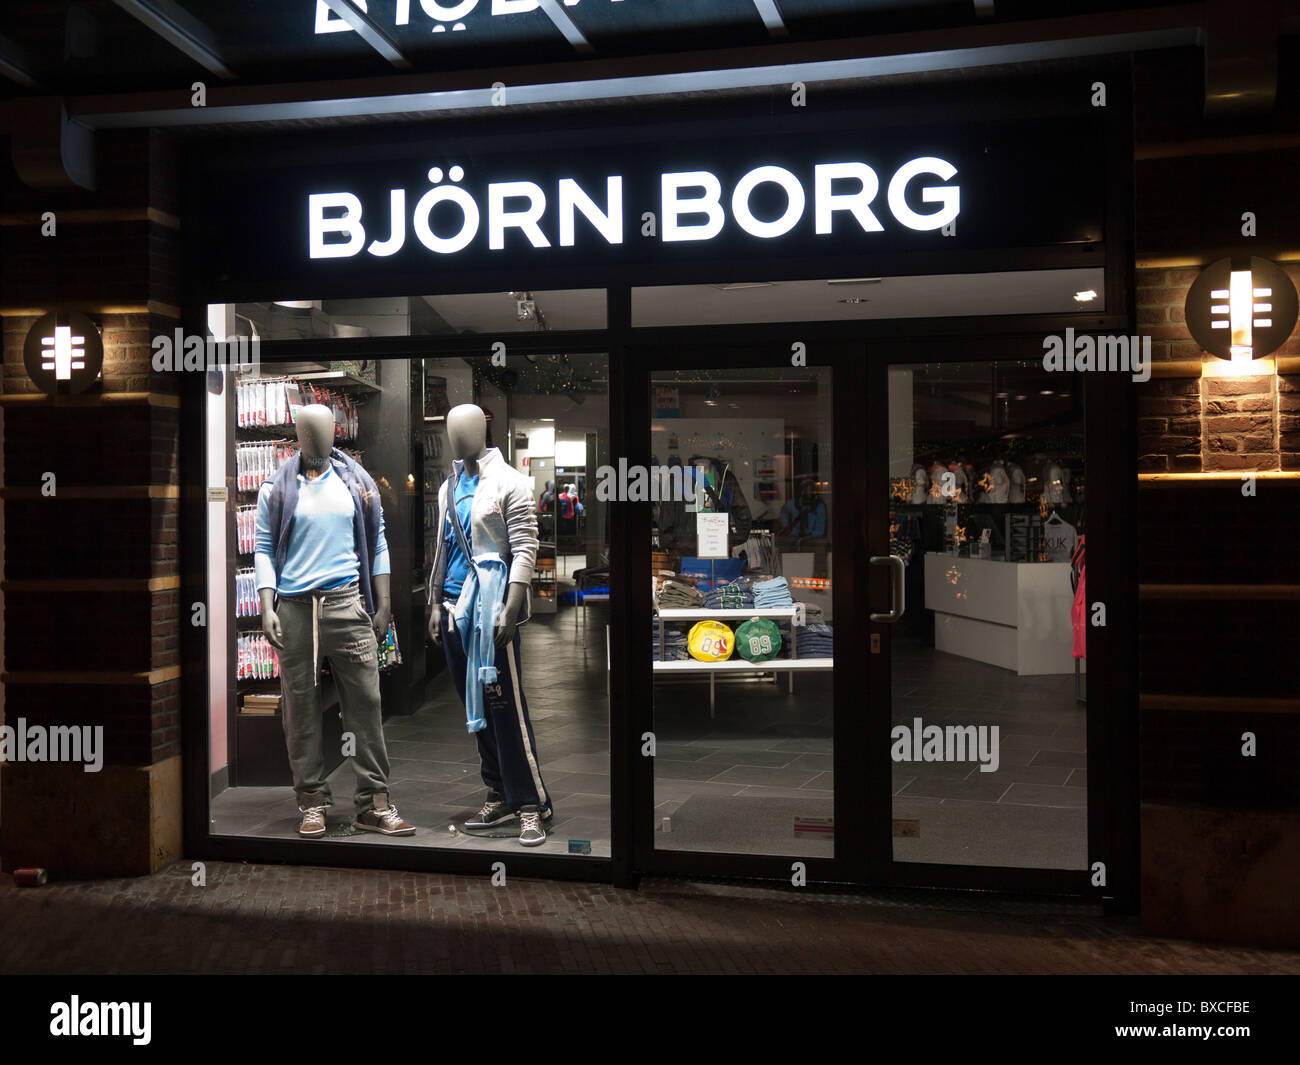 Bjorn Borg Clothes Shop In S Hertogenbosh Den Bosch Netherlands Stock Photo Alamy